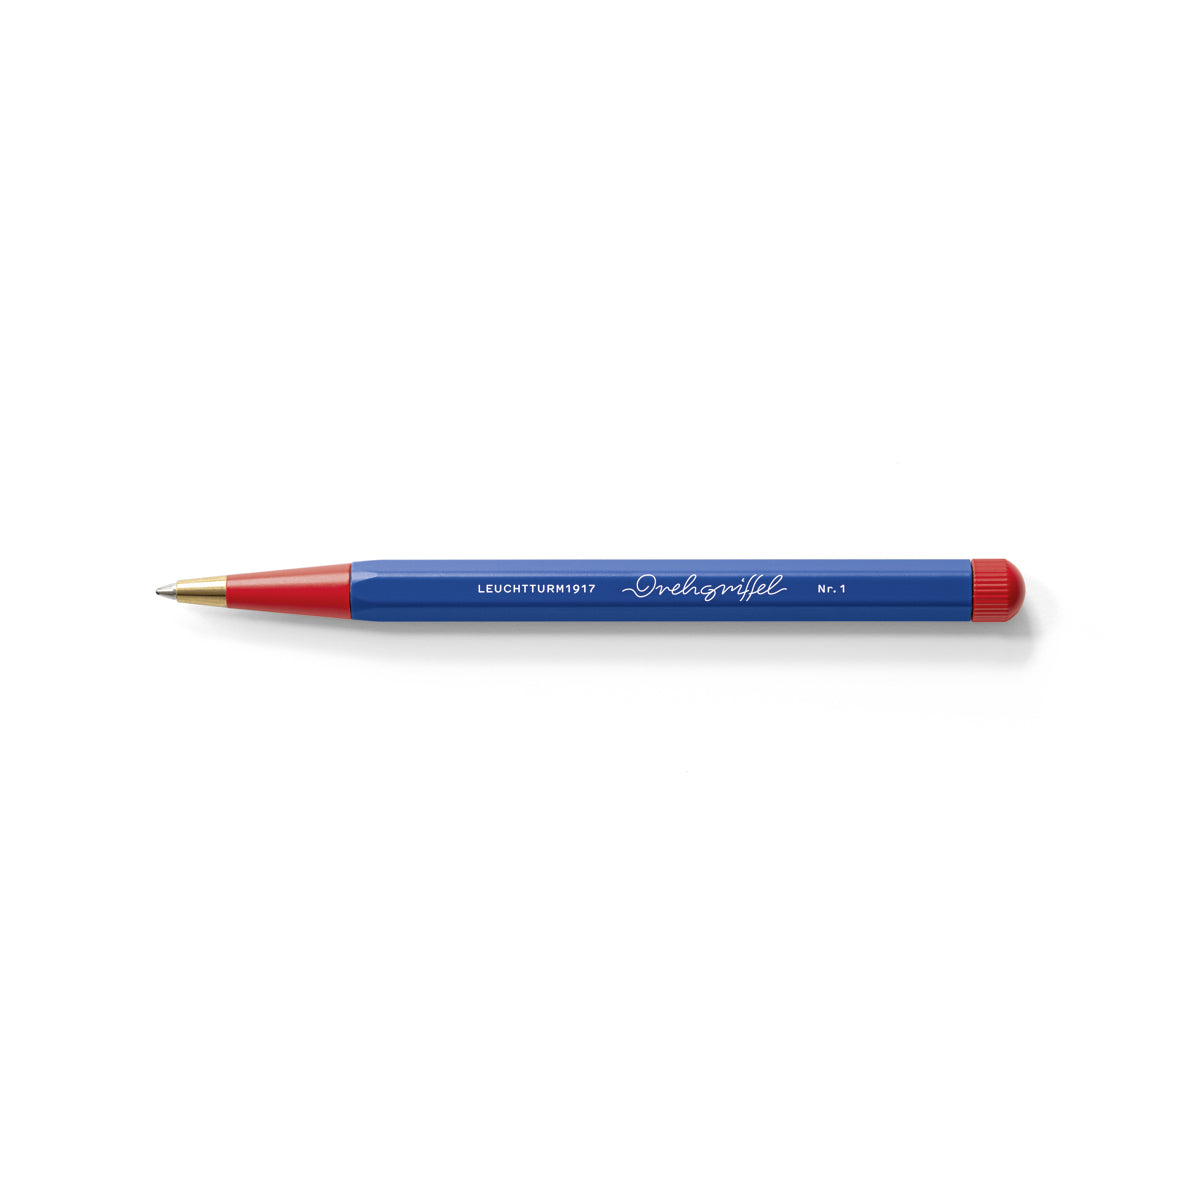 OCTÀGON DESIGN, Drehgriffel Pen , blue and red color, white typography. 